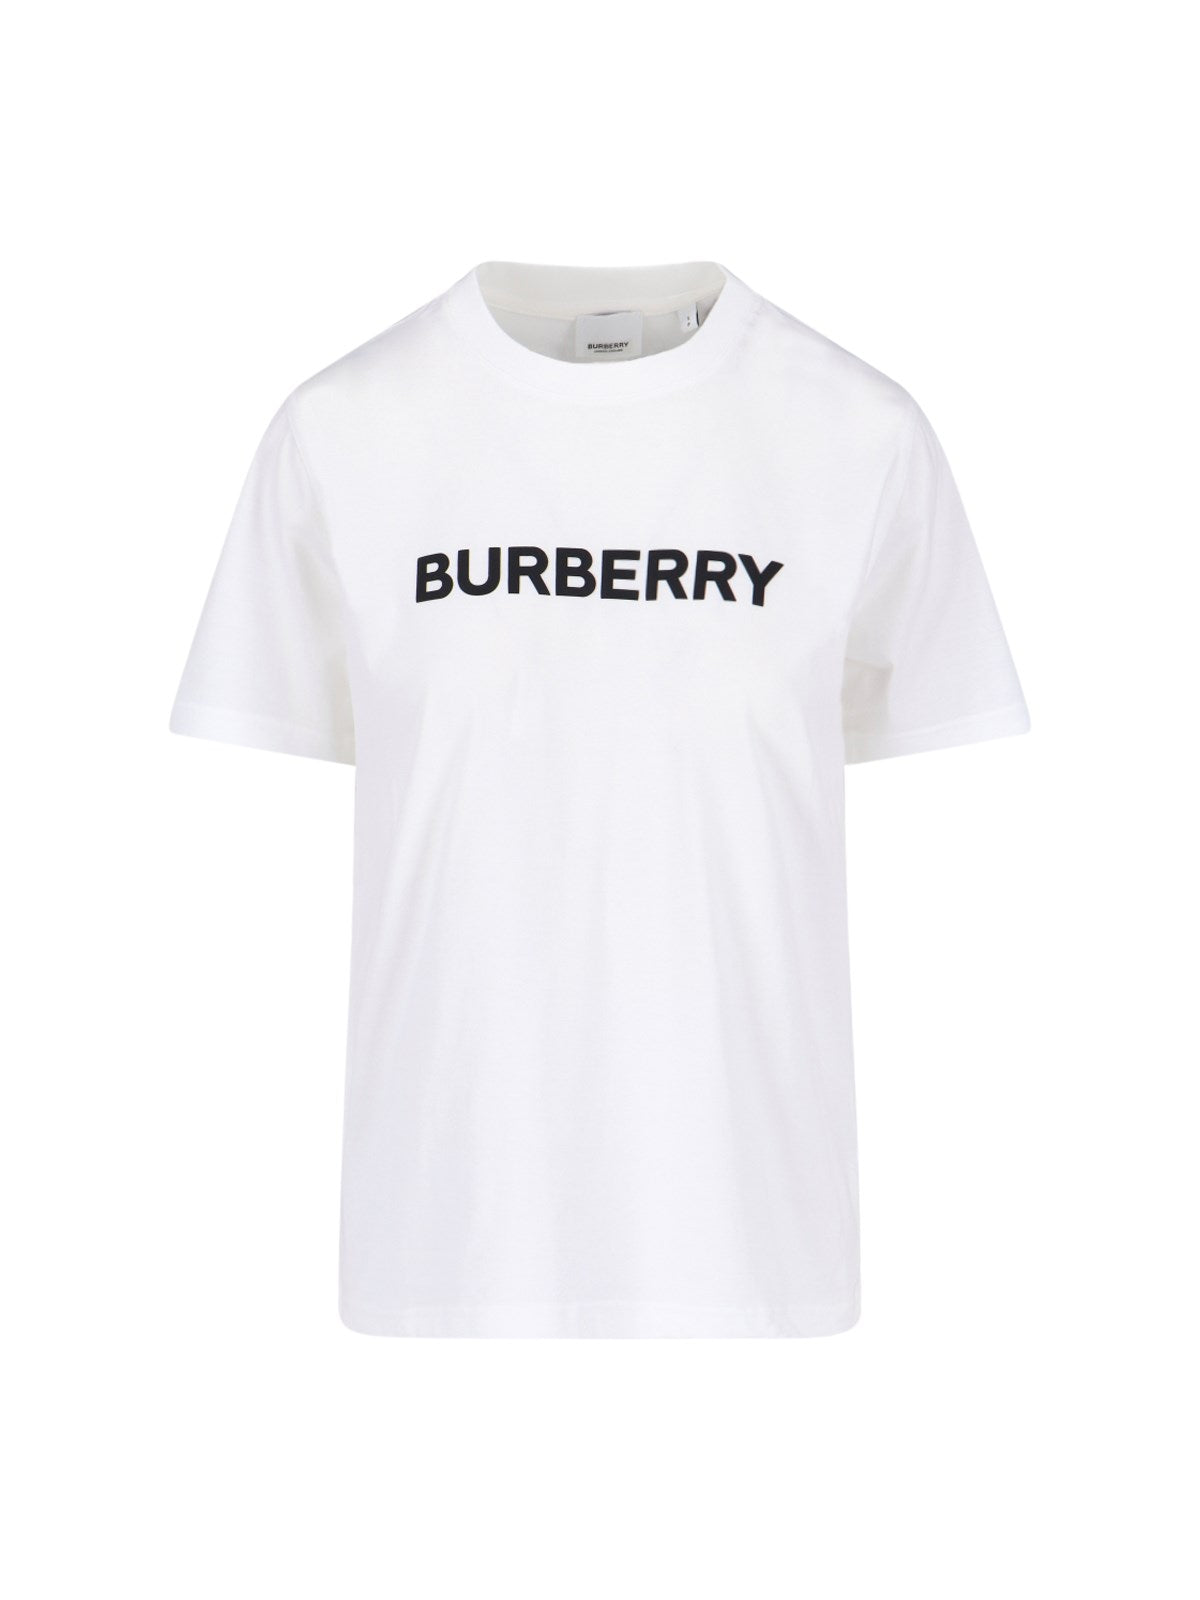 burberry t-shirt logo